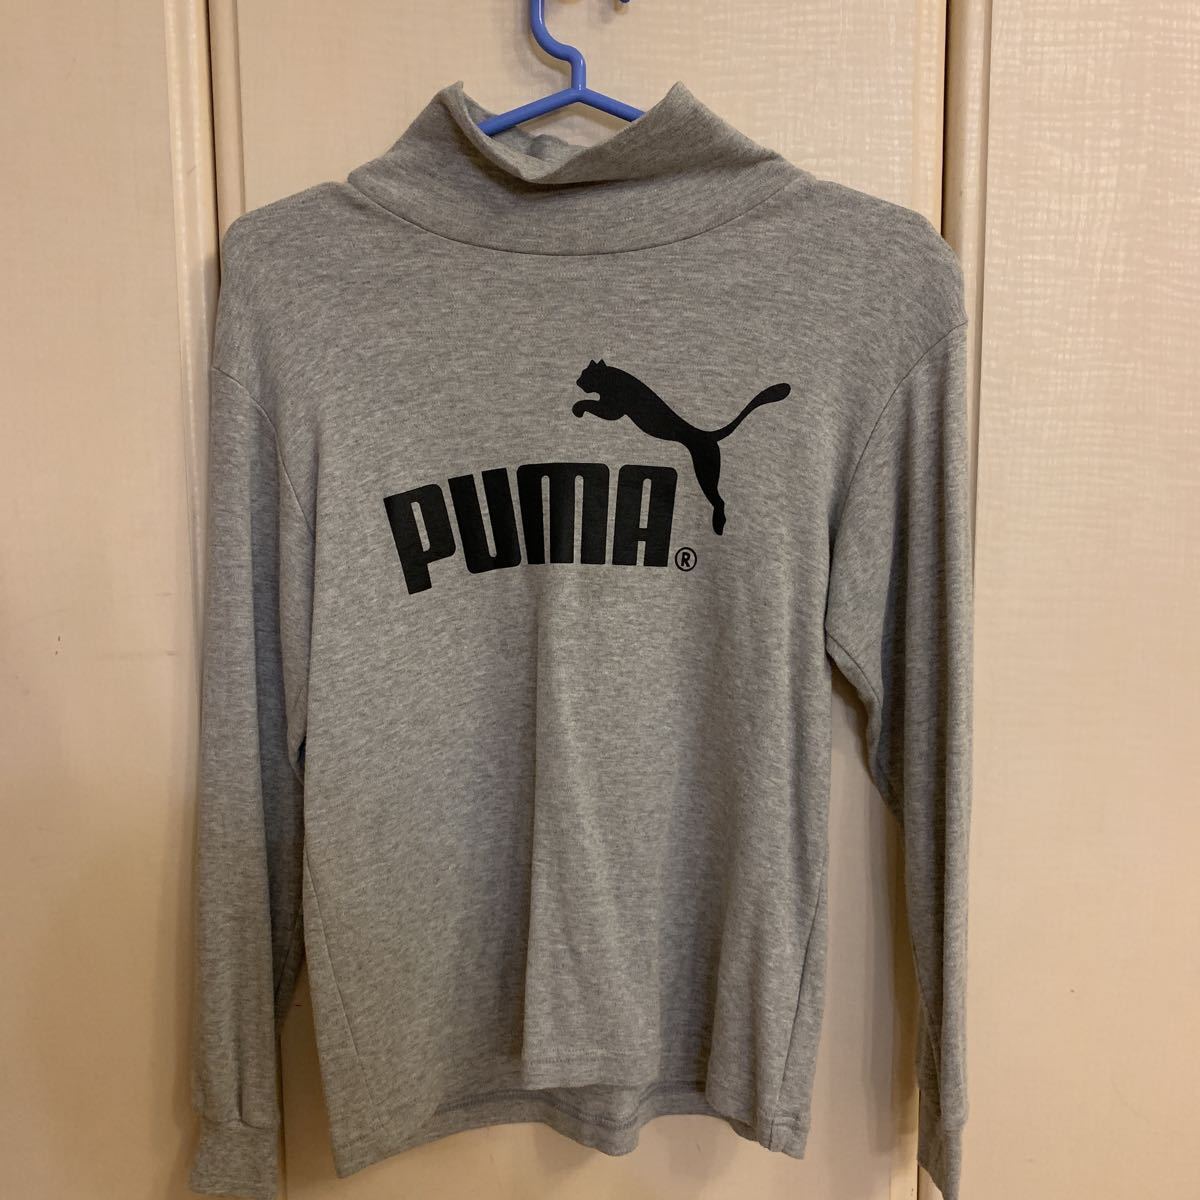  Puma child 140 size long sleeve shirt gray unused . close 